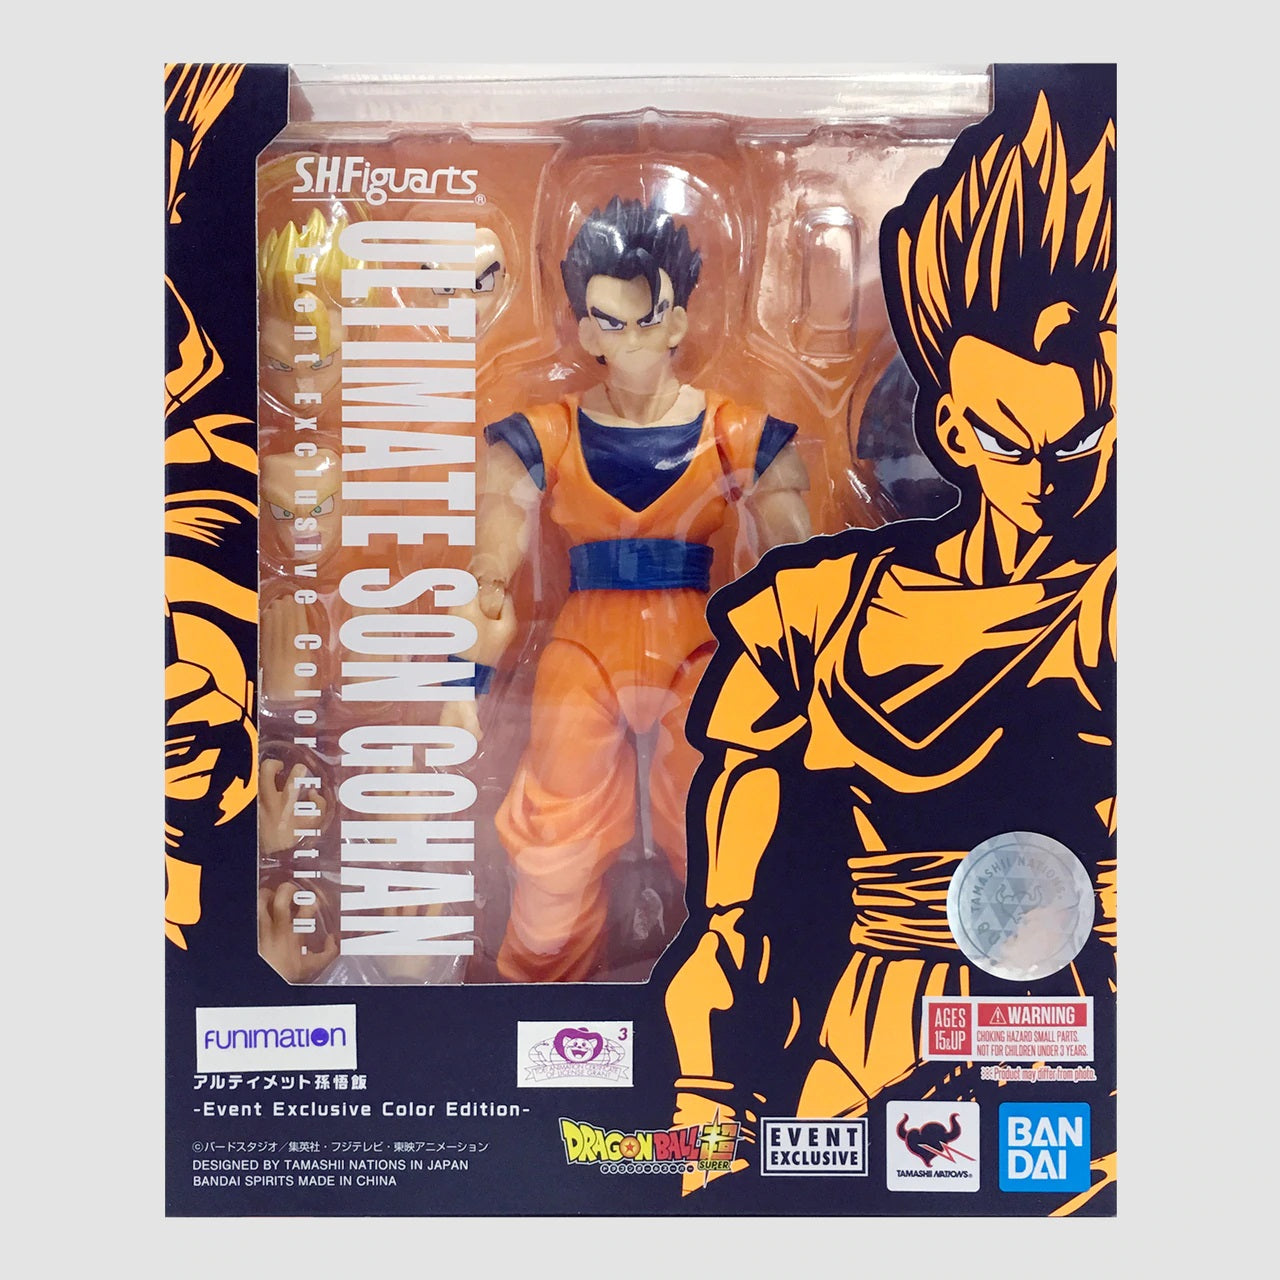 NEW! Demoniacal Fit Base Goku (3.0) Product Photos